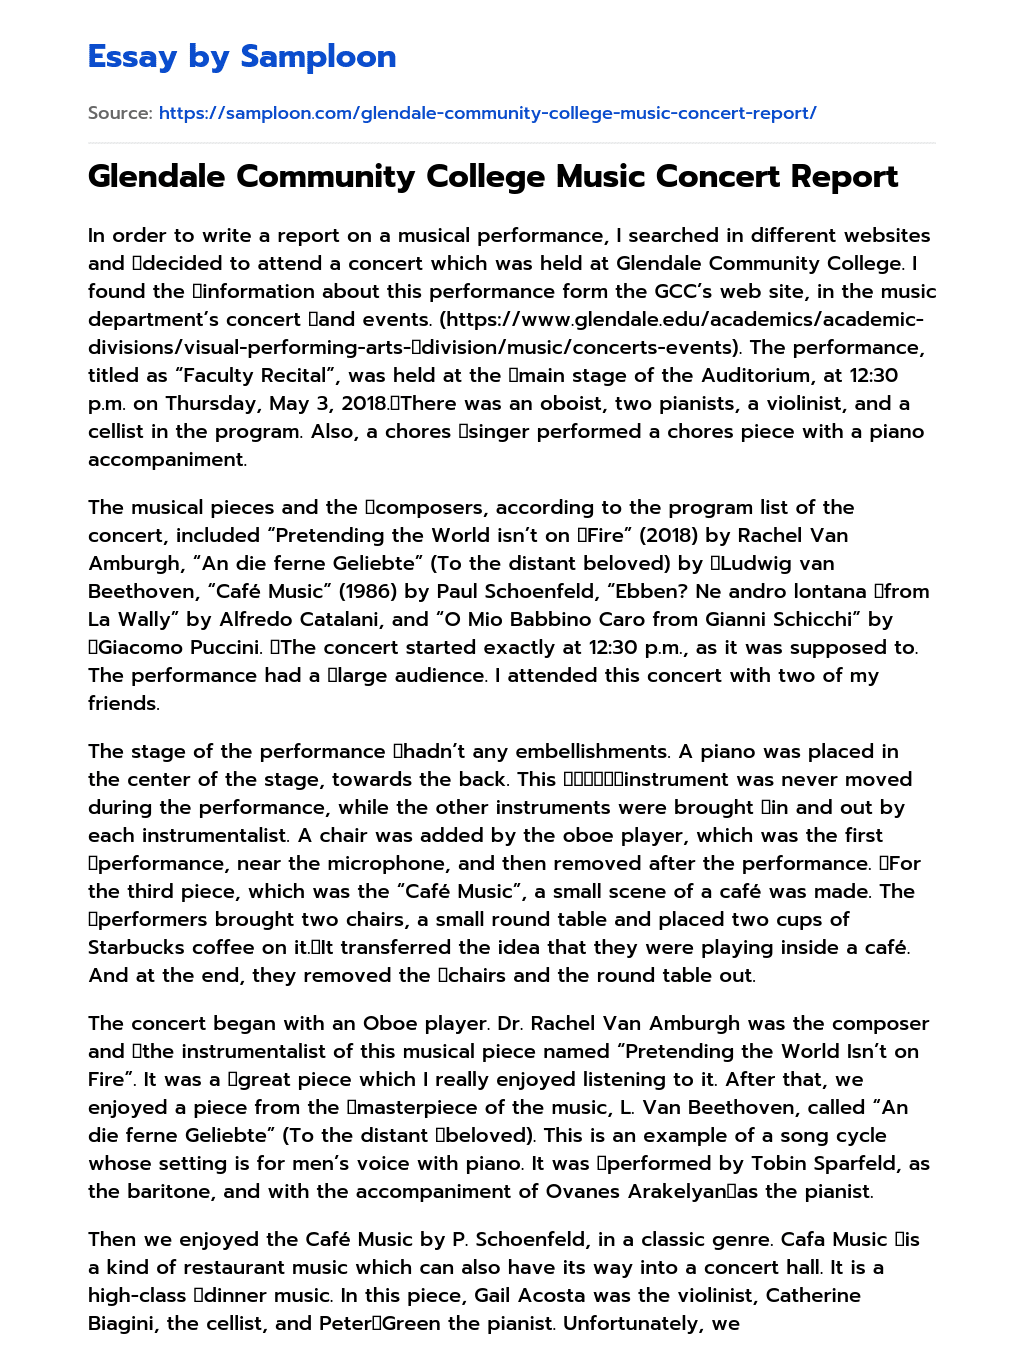 Glendale Community College Music Concert Report essay